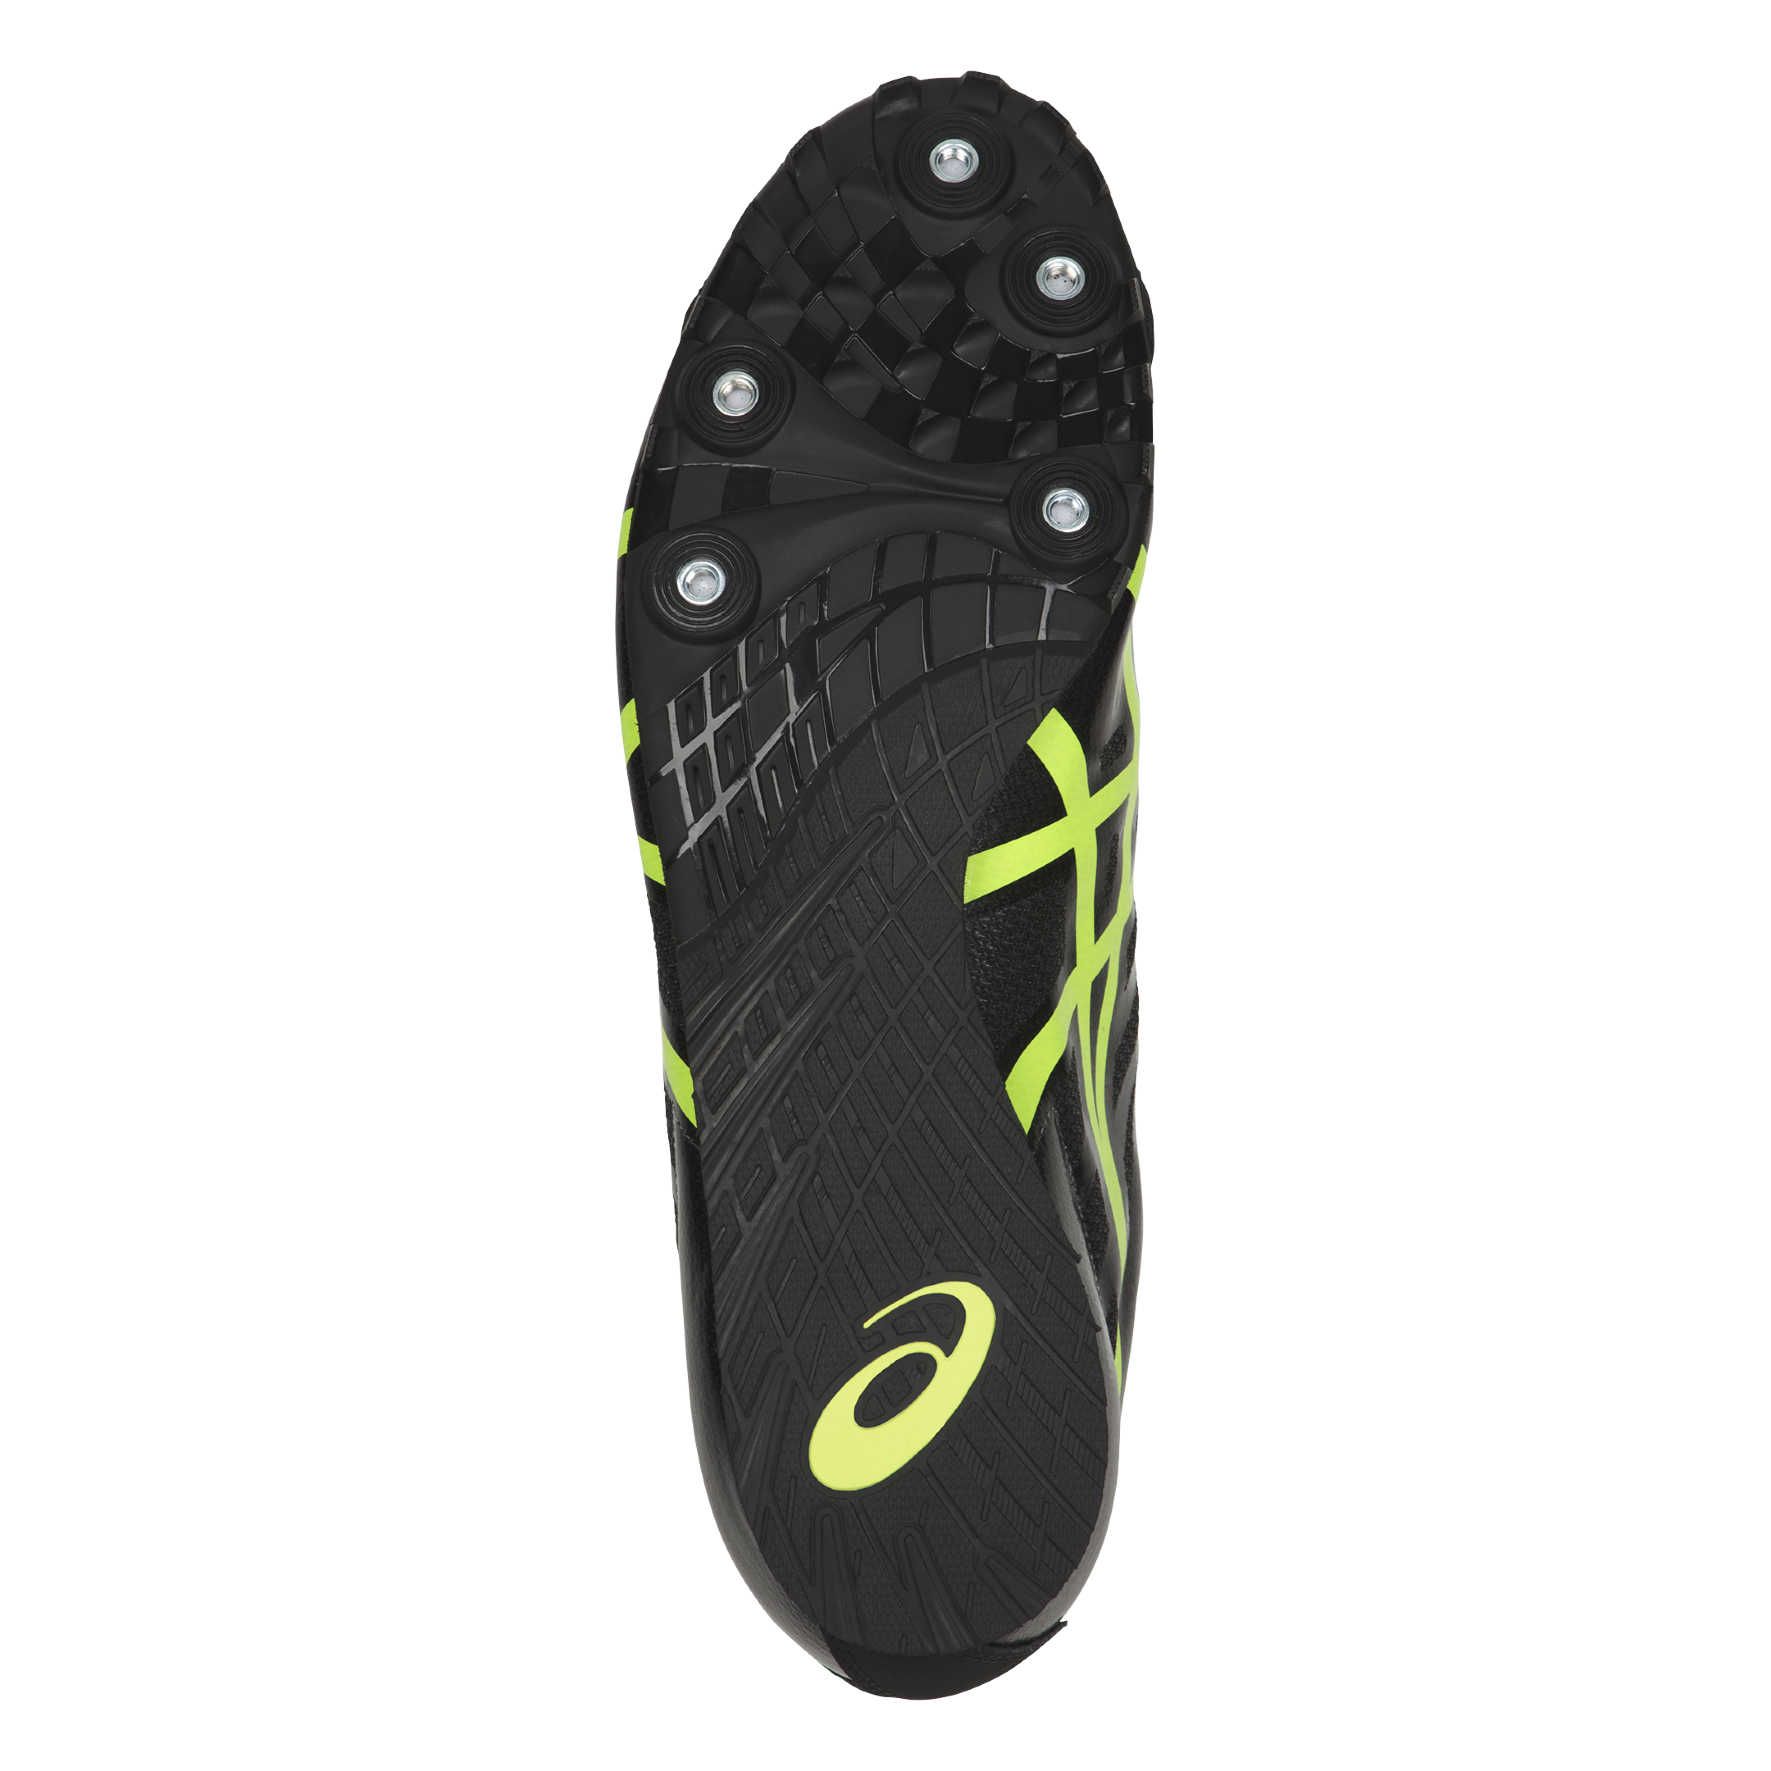 Chaussures Athlétisme Hyper LD 5 - Black/Safety Yellow